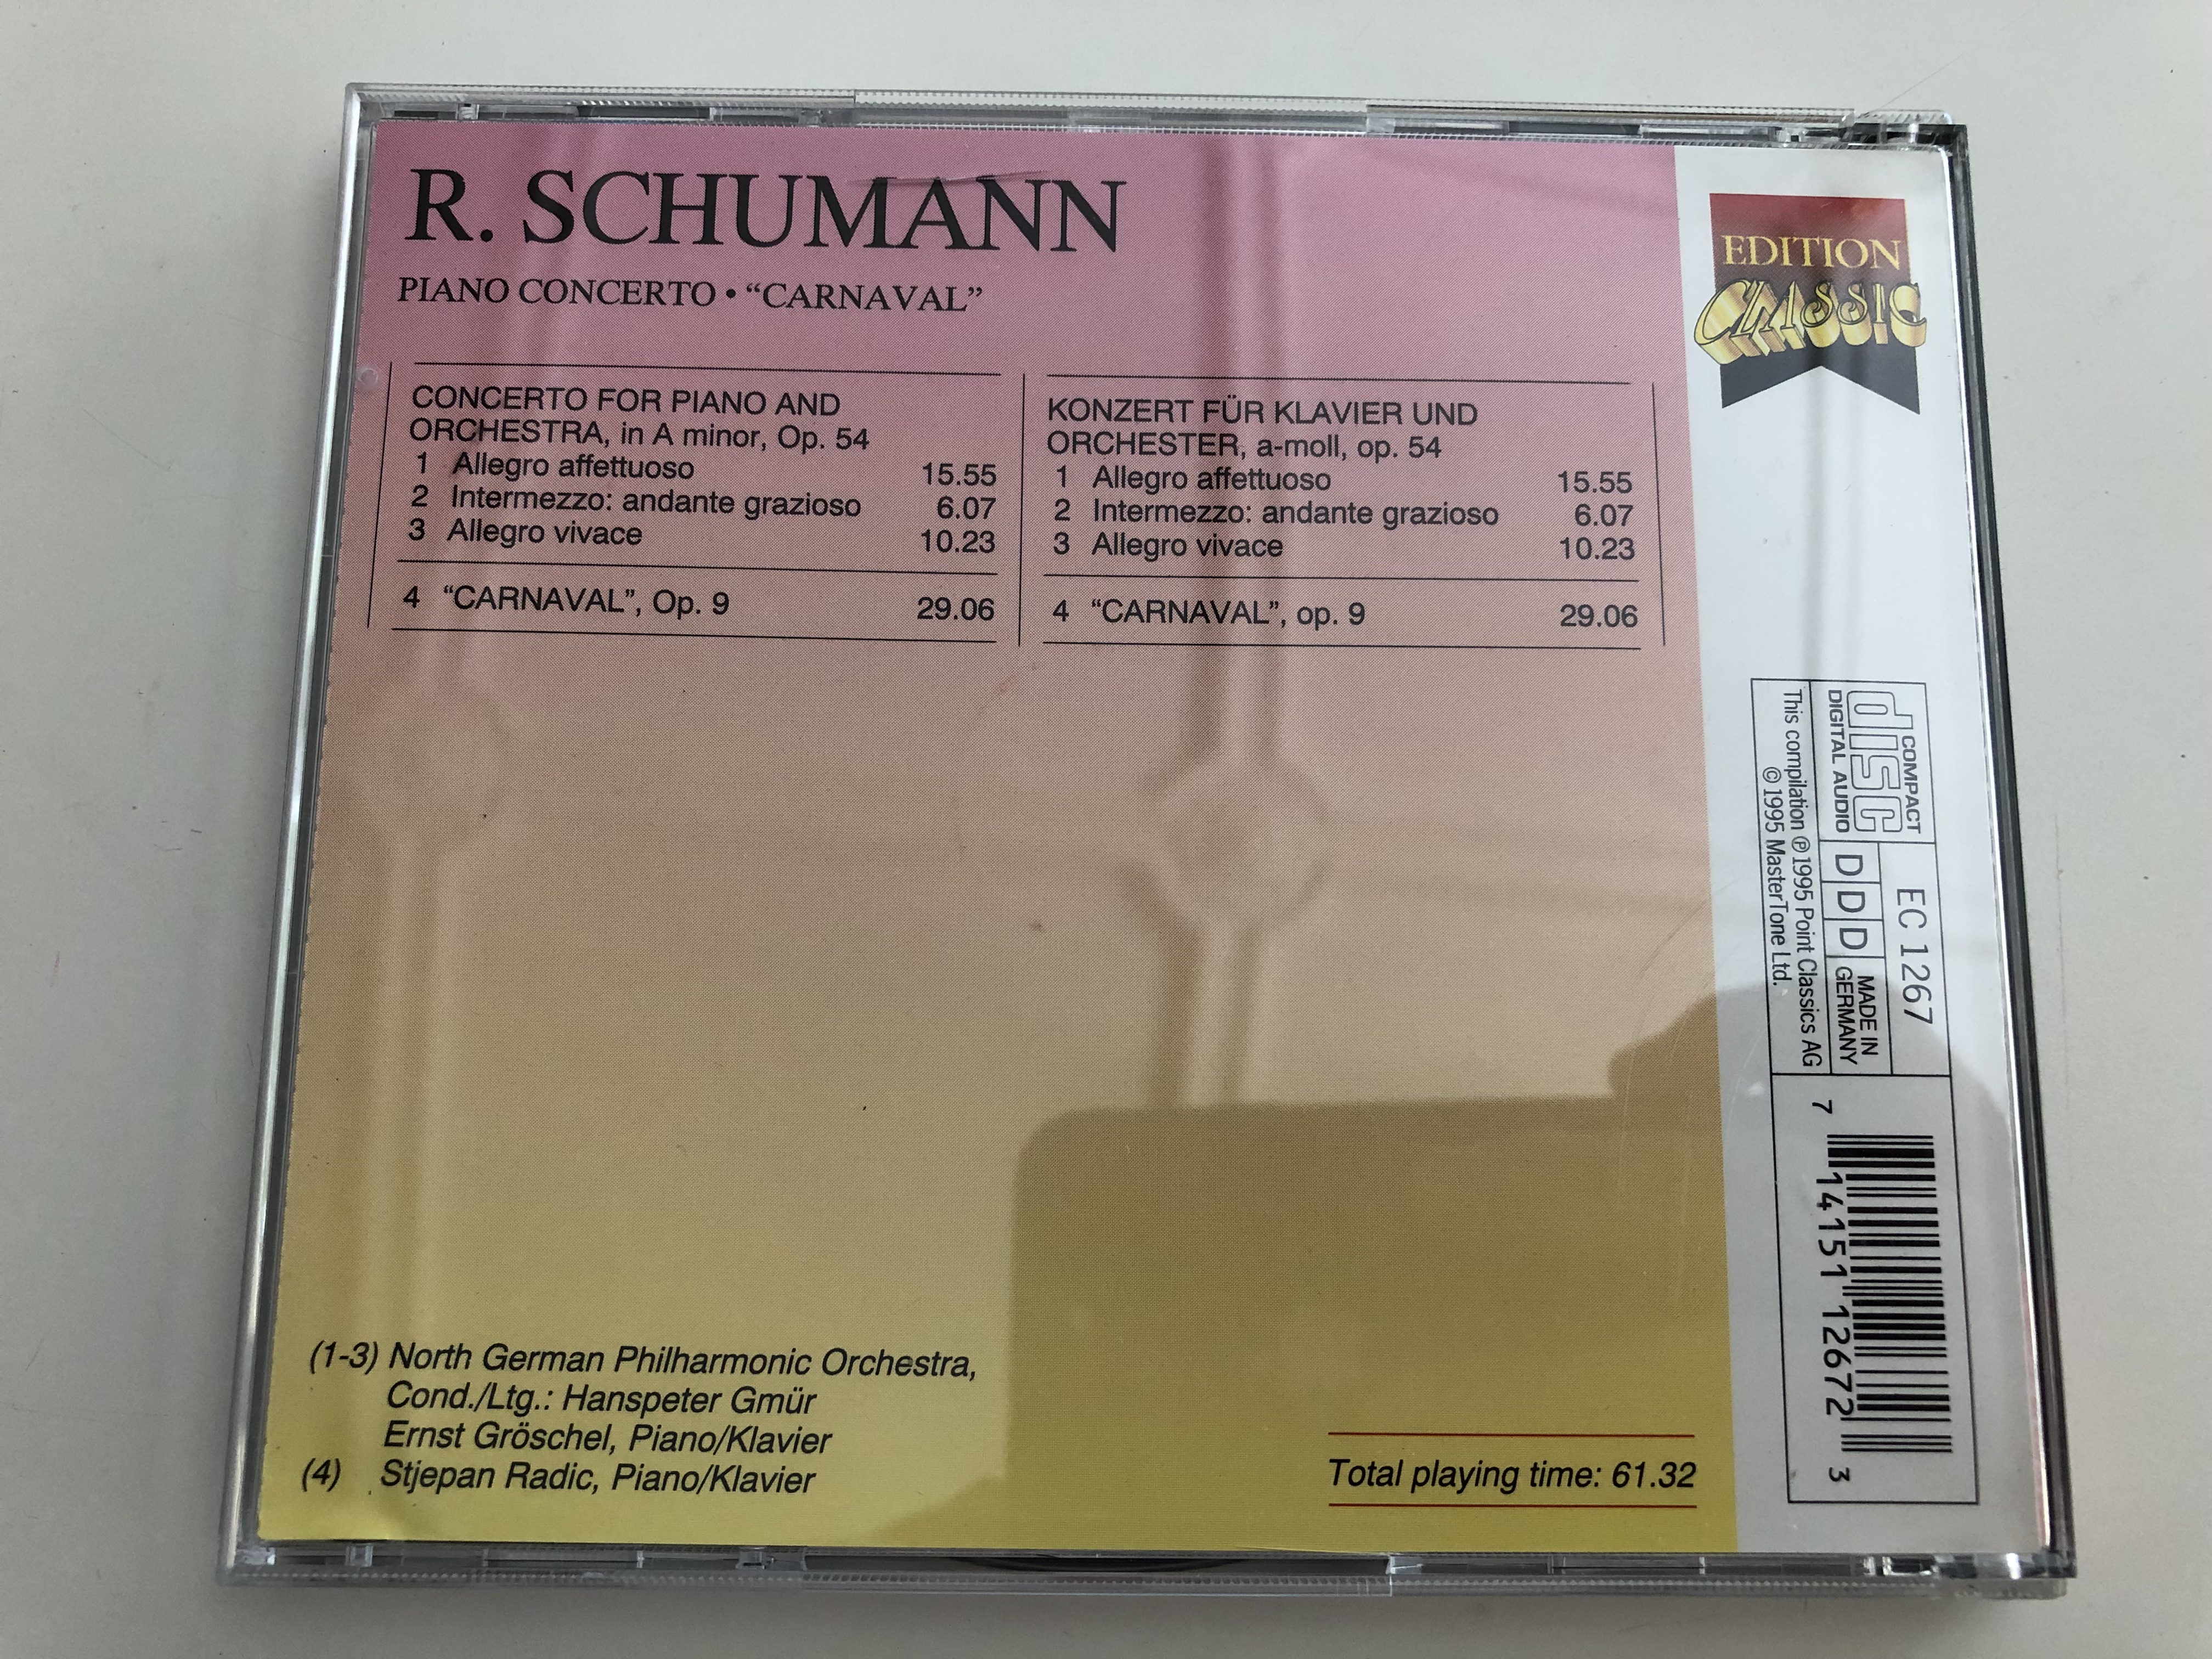 schumann-piano-concerto-carnaval-classic-edition-audio-cd-1995-ec-1267-3-.jpg